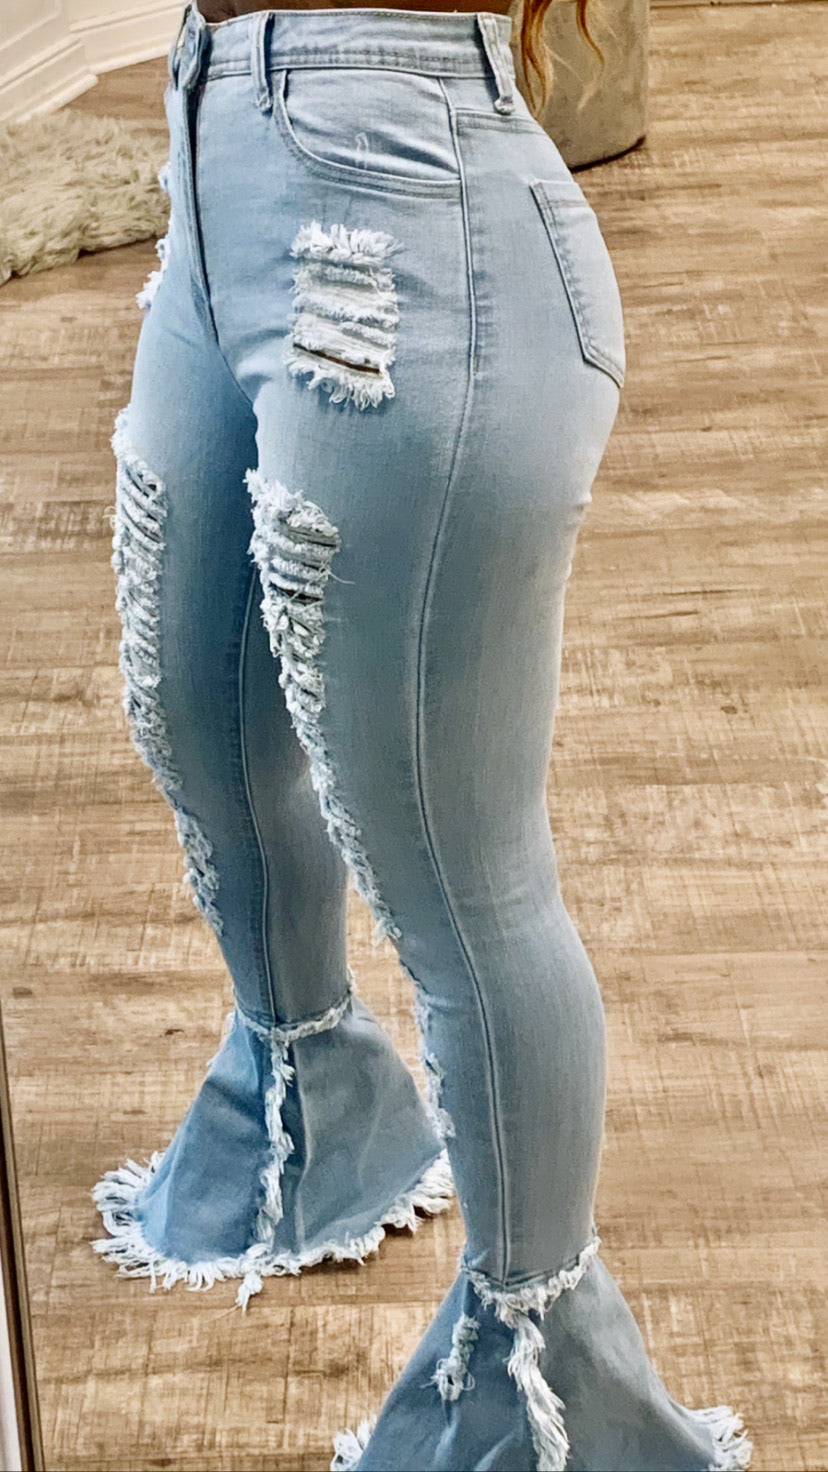 Mali jeans